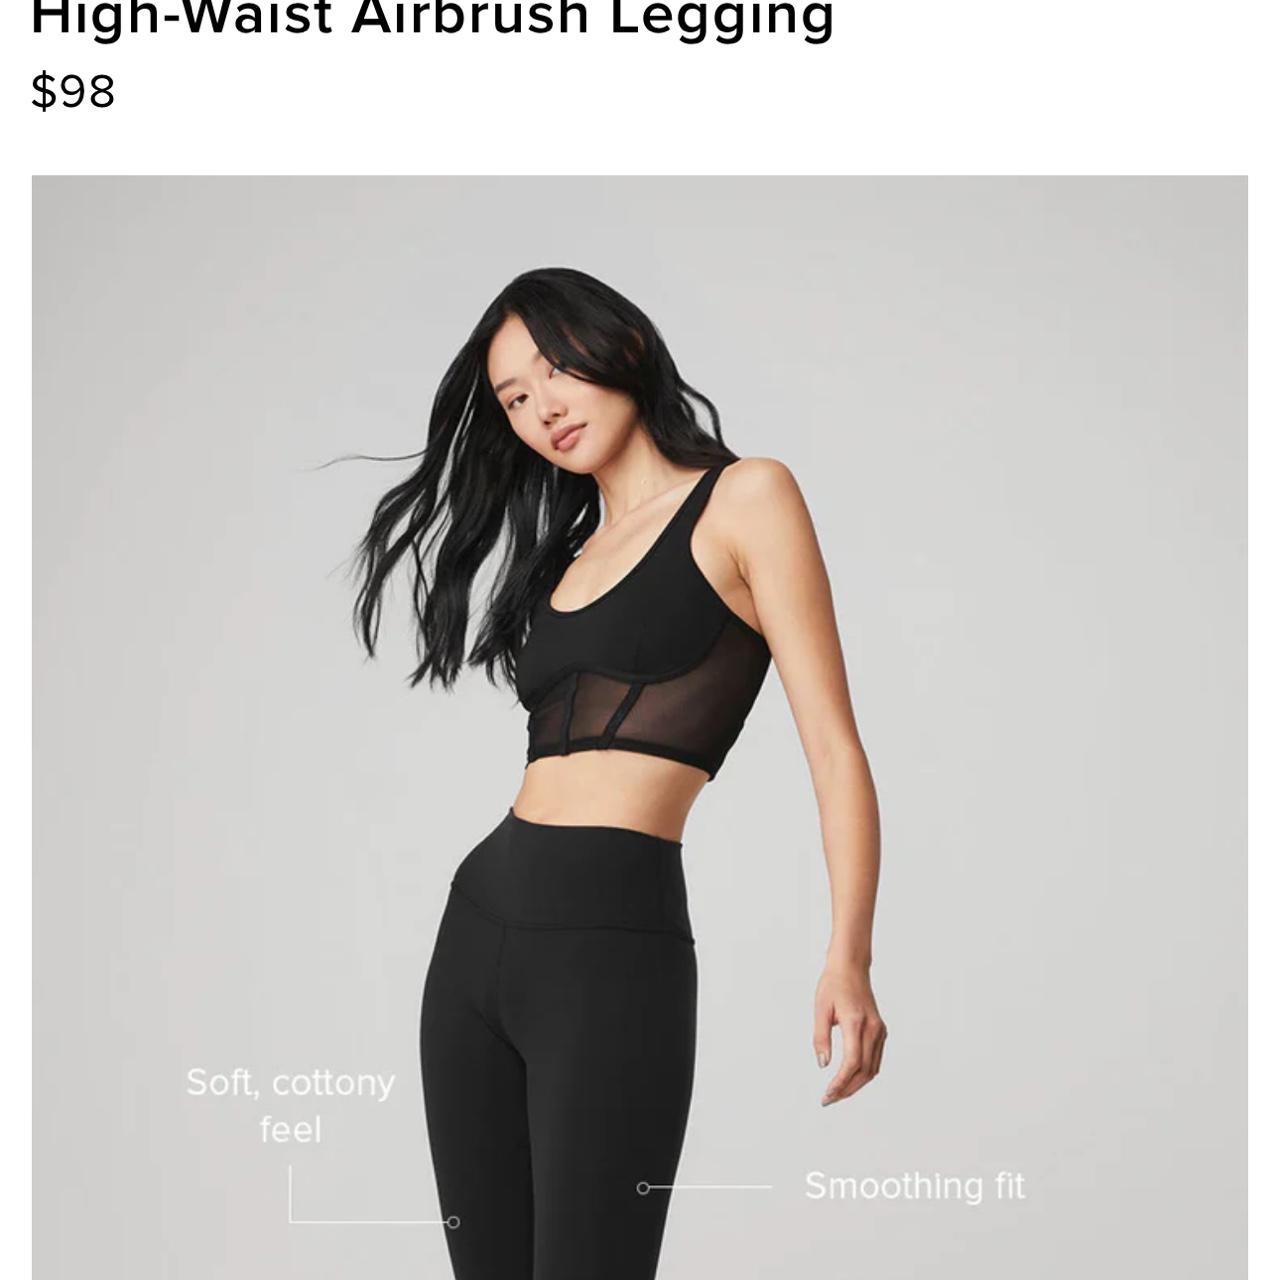 Black 7/8 High-Waist Airbrush Legging